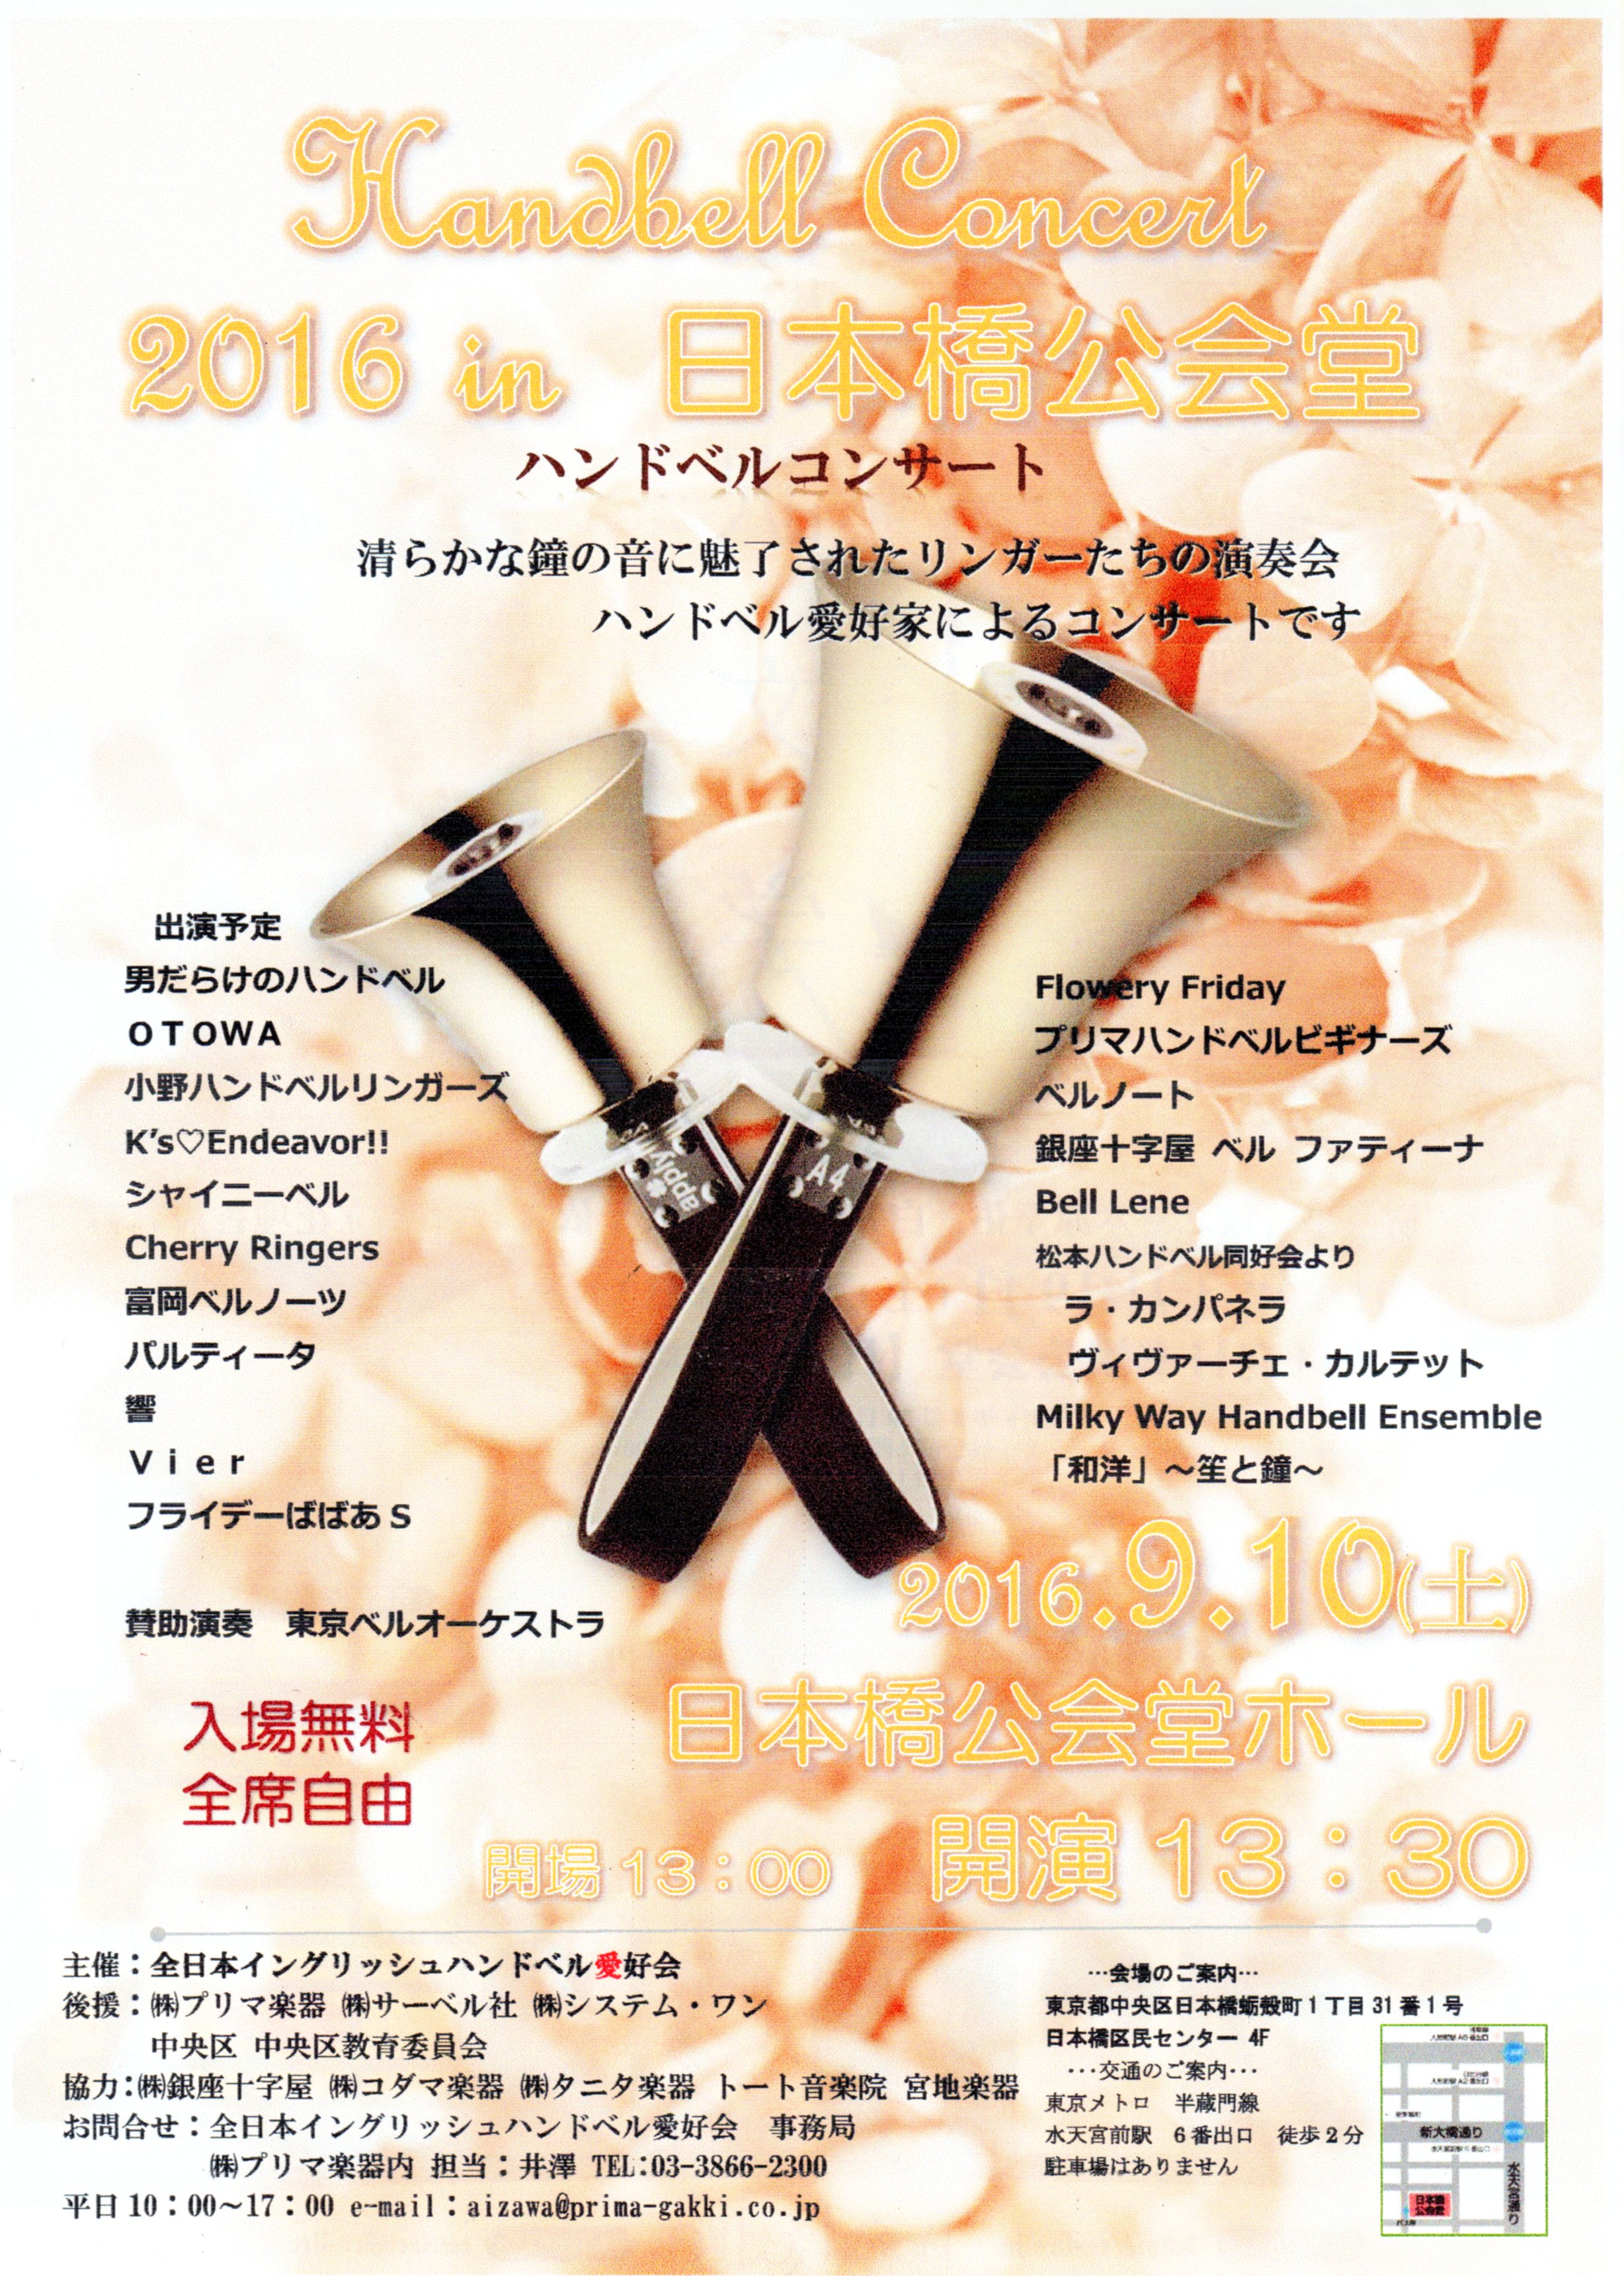 Handbell Concert 2016 in 日本橋公会堂